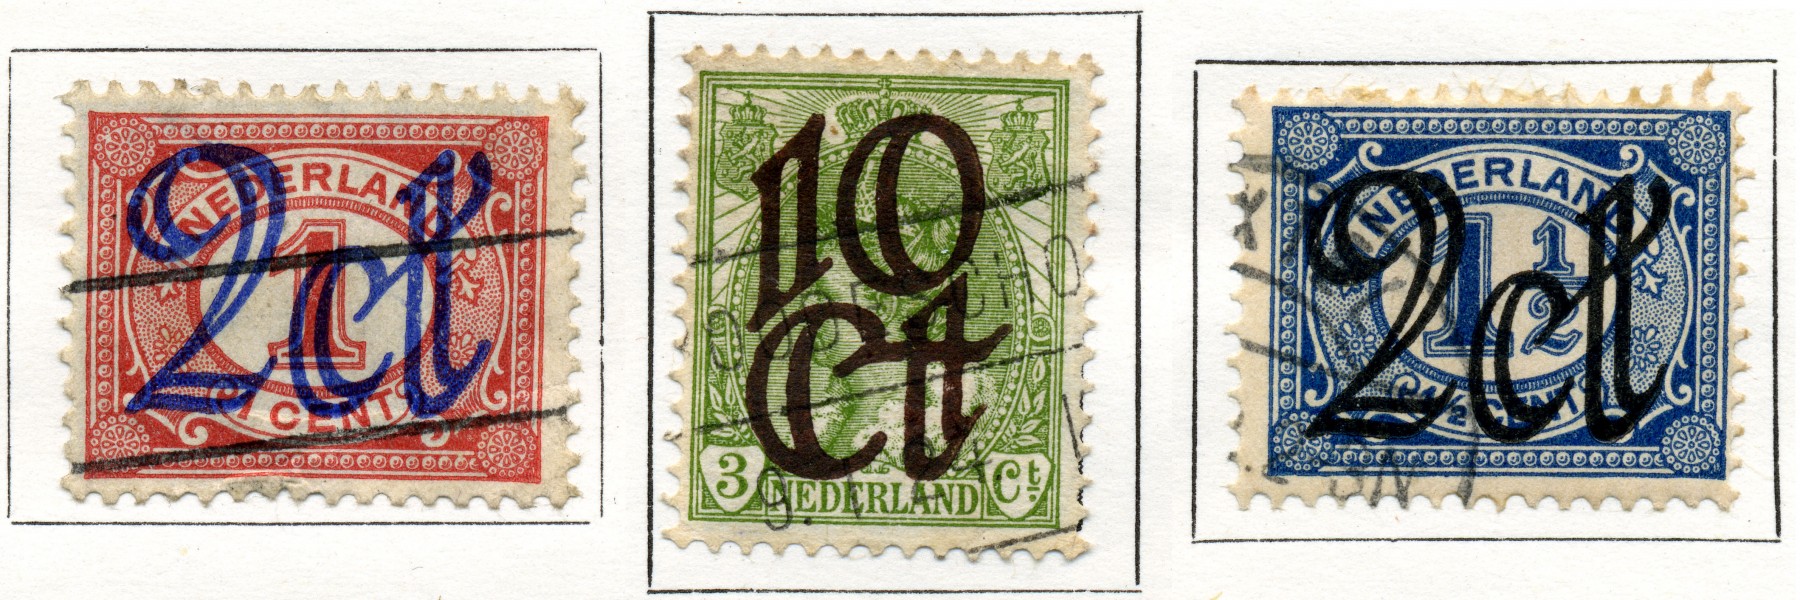 Postzegel 1923 2-10 cent